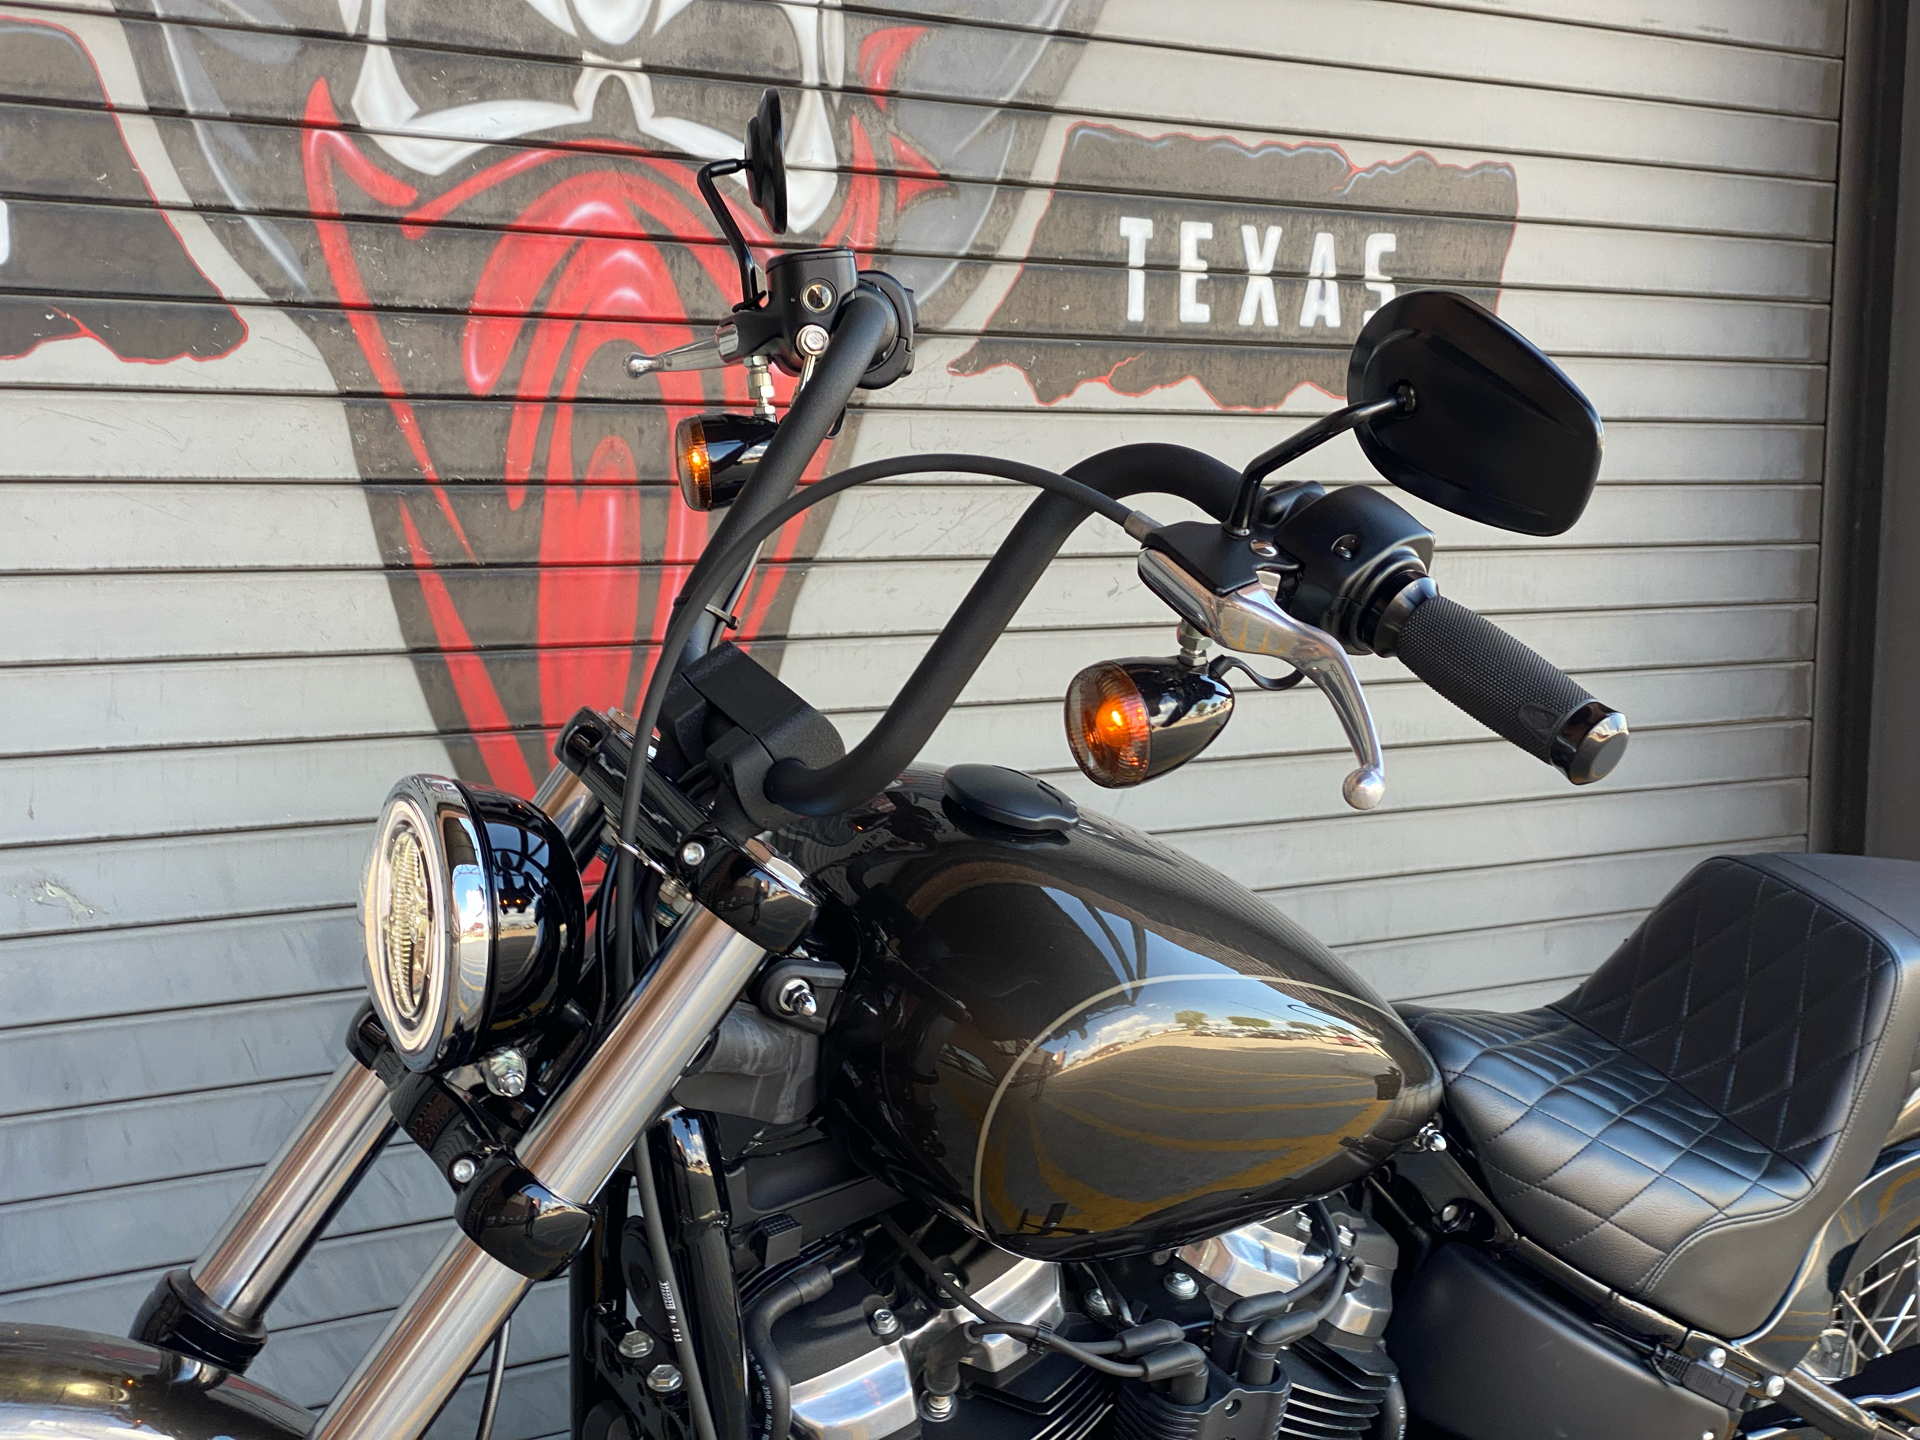 2020 Harley-Davidson Street Bob® in Carrollton, Texas - Photo 13